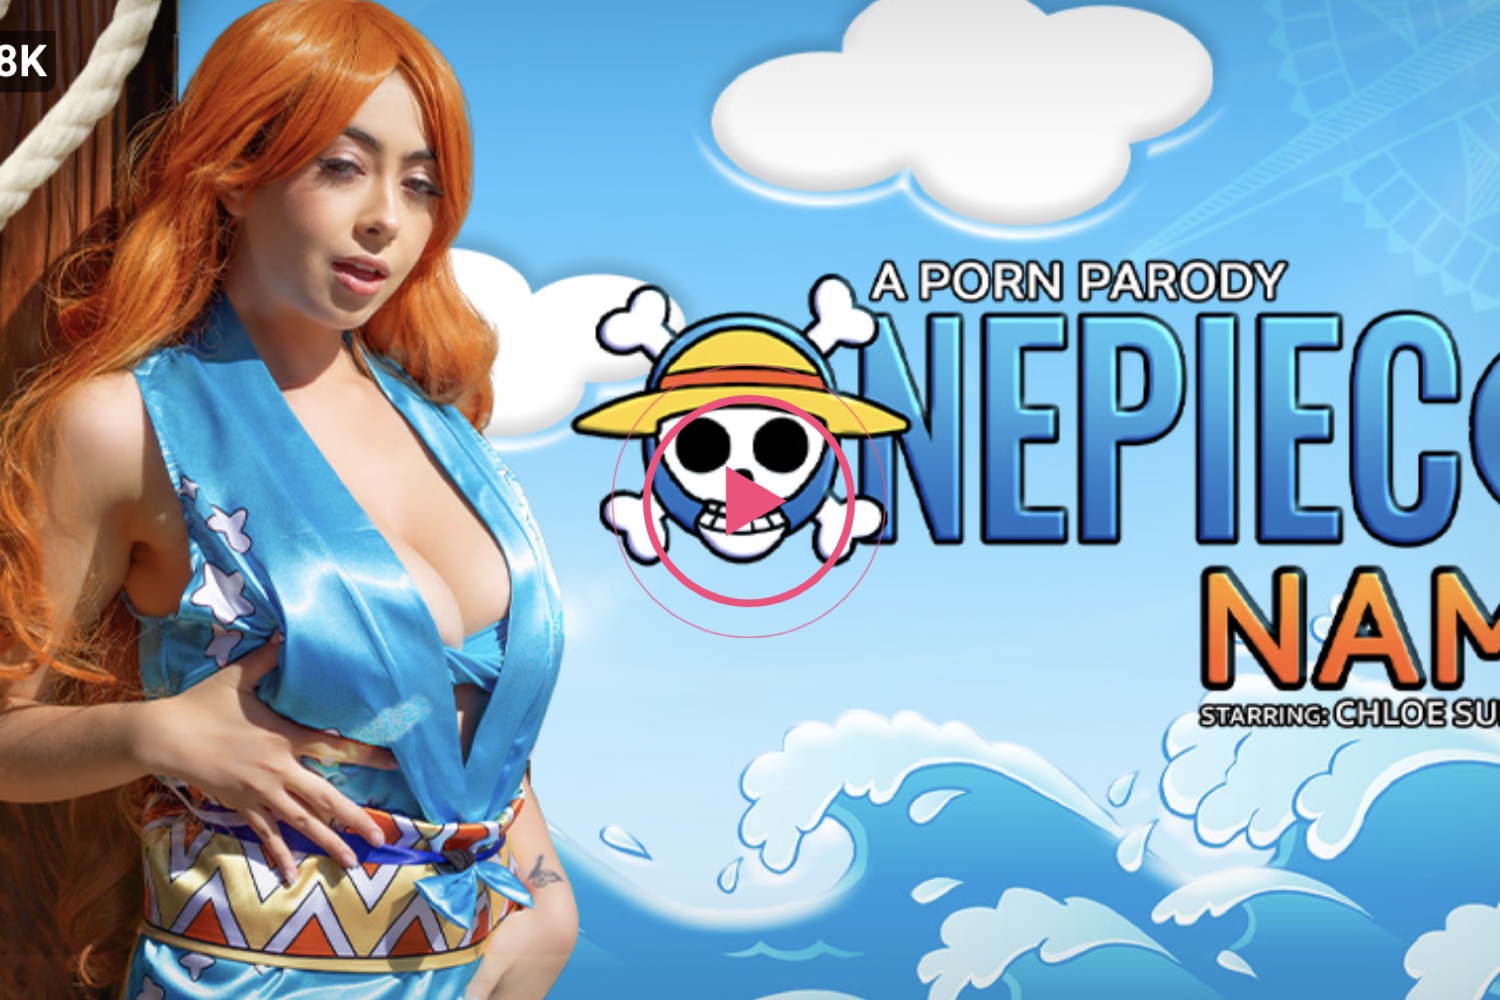 One Piece: Nami (A Porn Parody) - Chloe Surreal VR Porn - Chloe Surreal Virtual Reality Porn